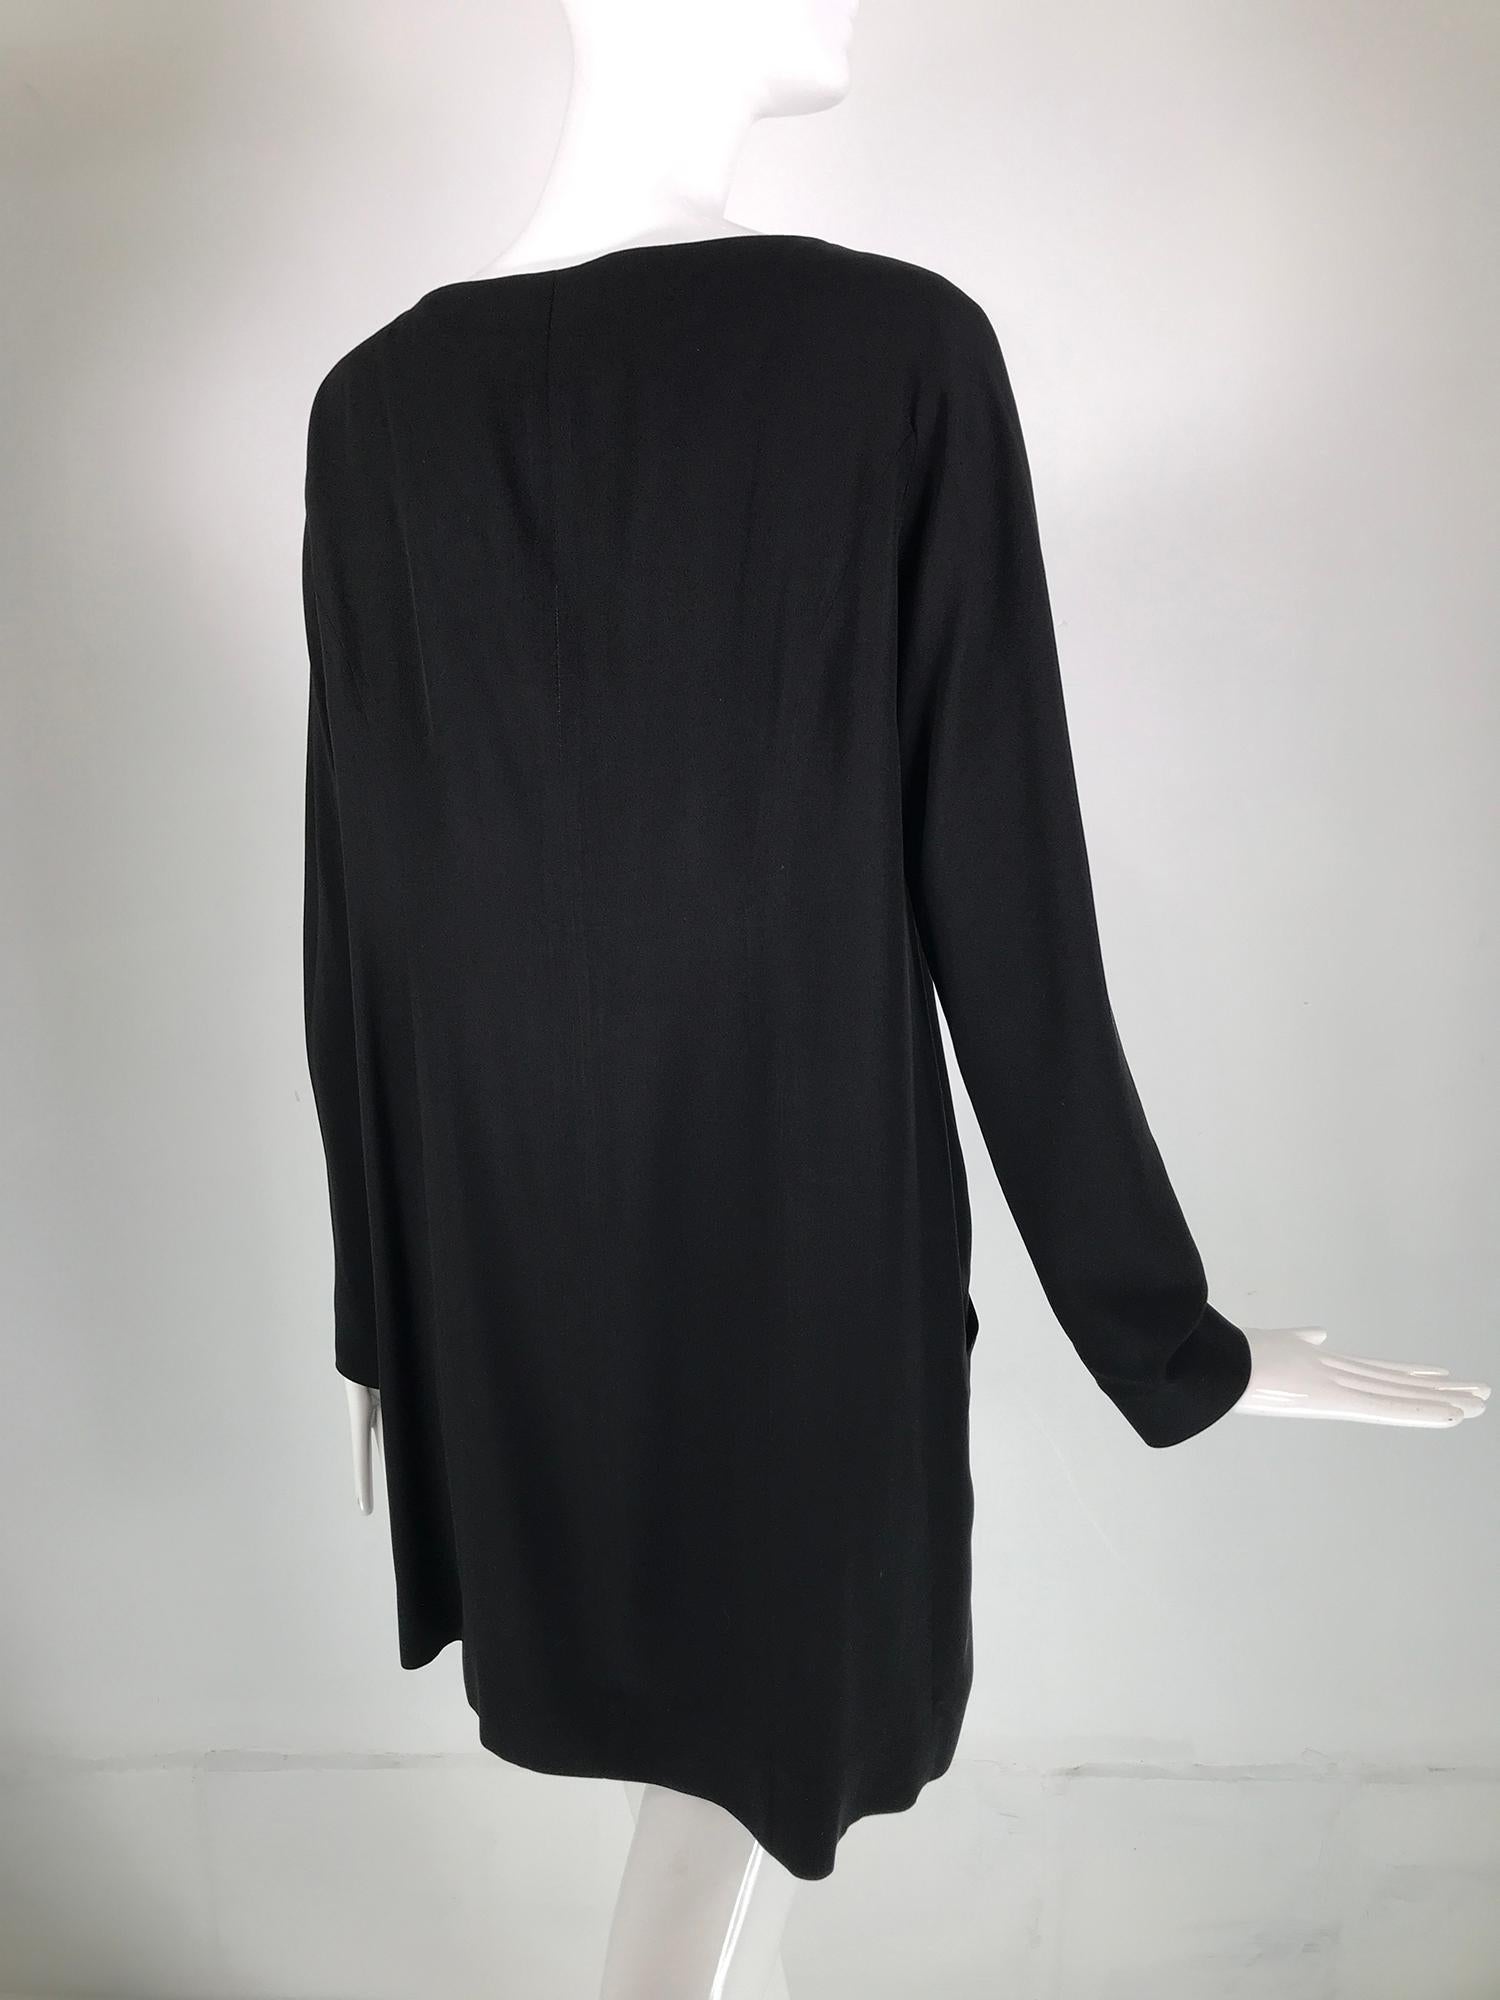  Donna Karan Black Silk Crepe Open Front Jacket With Pockets 1980s For Sale 3